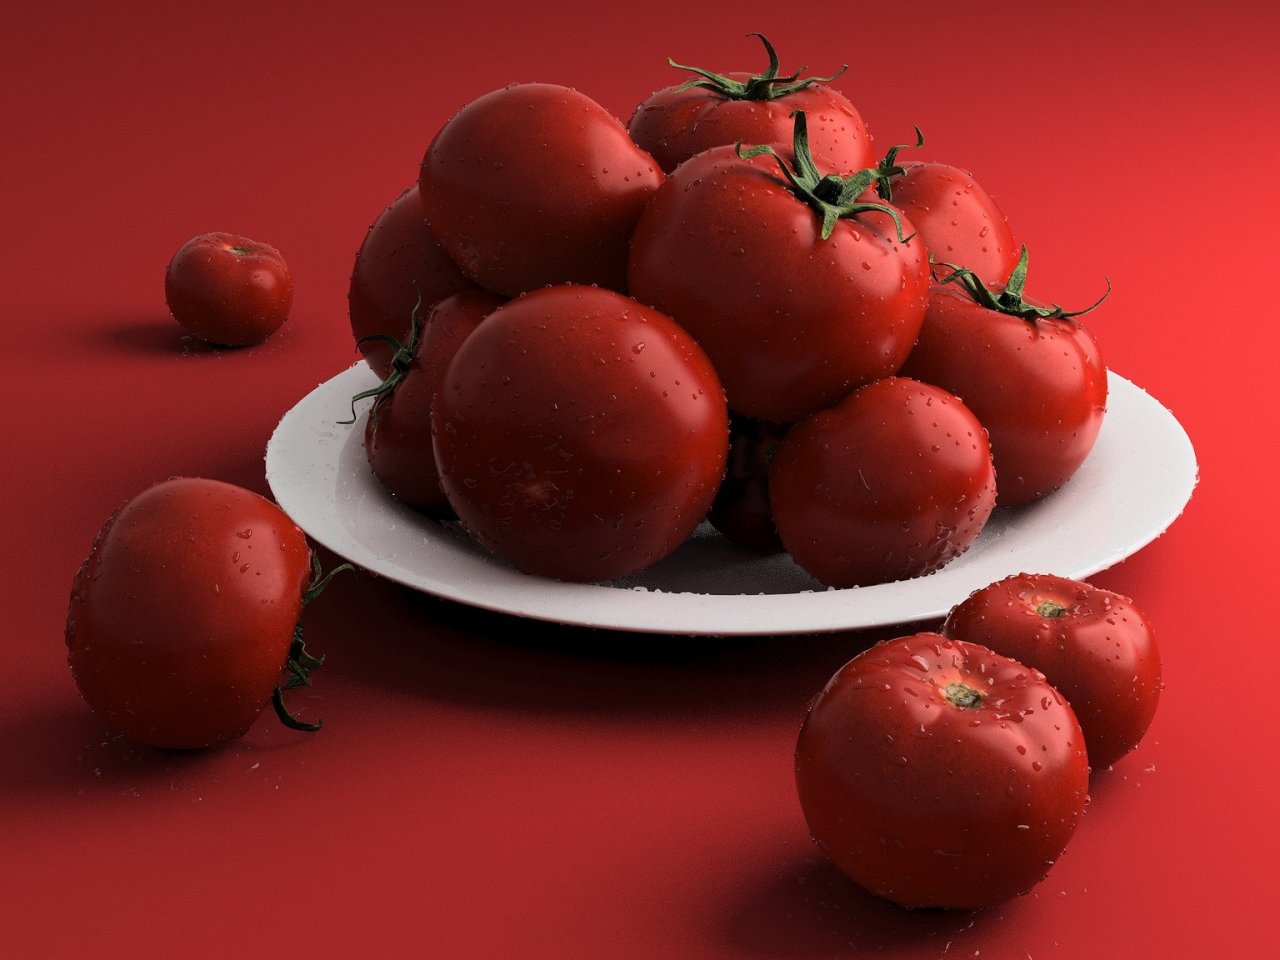 Пазл онлайн: Красные помидоры на красном